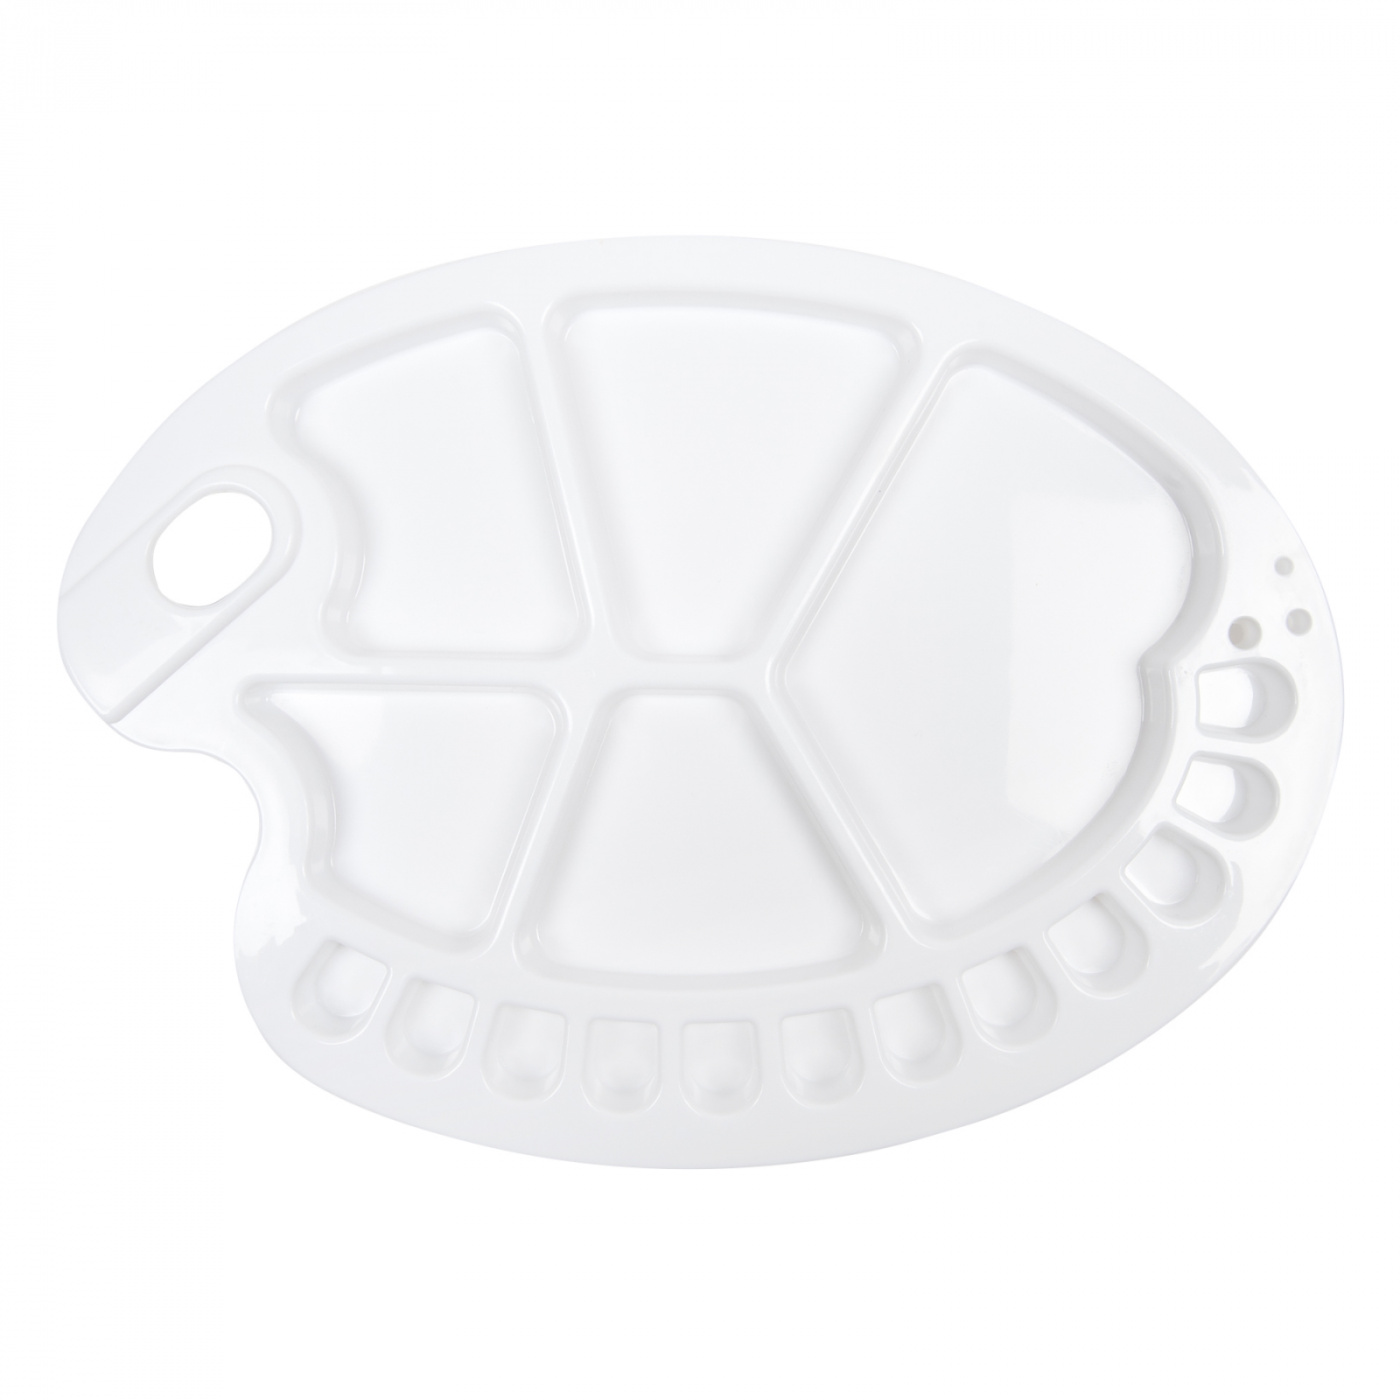 Палитра пластик овальная Pinax ,17 углублений палитра пластиковая овальная малевичъ без ячеек